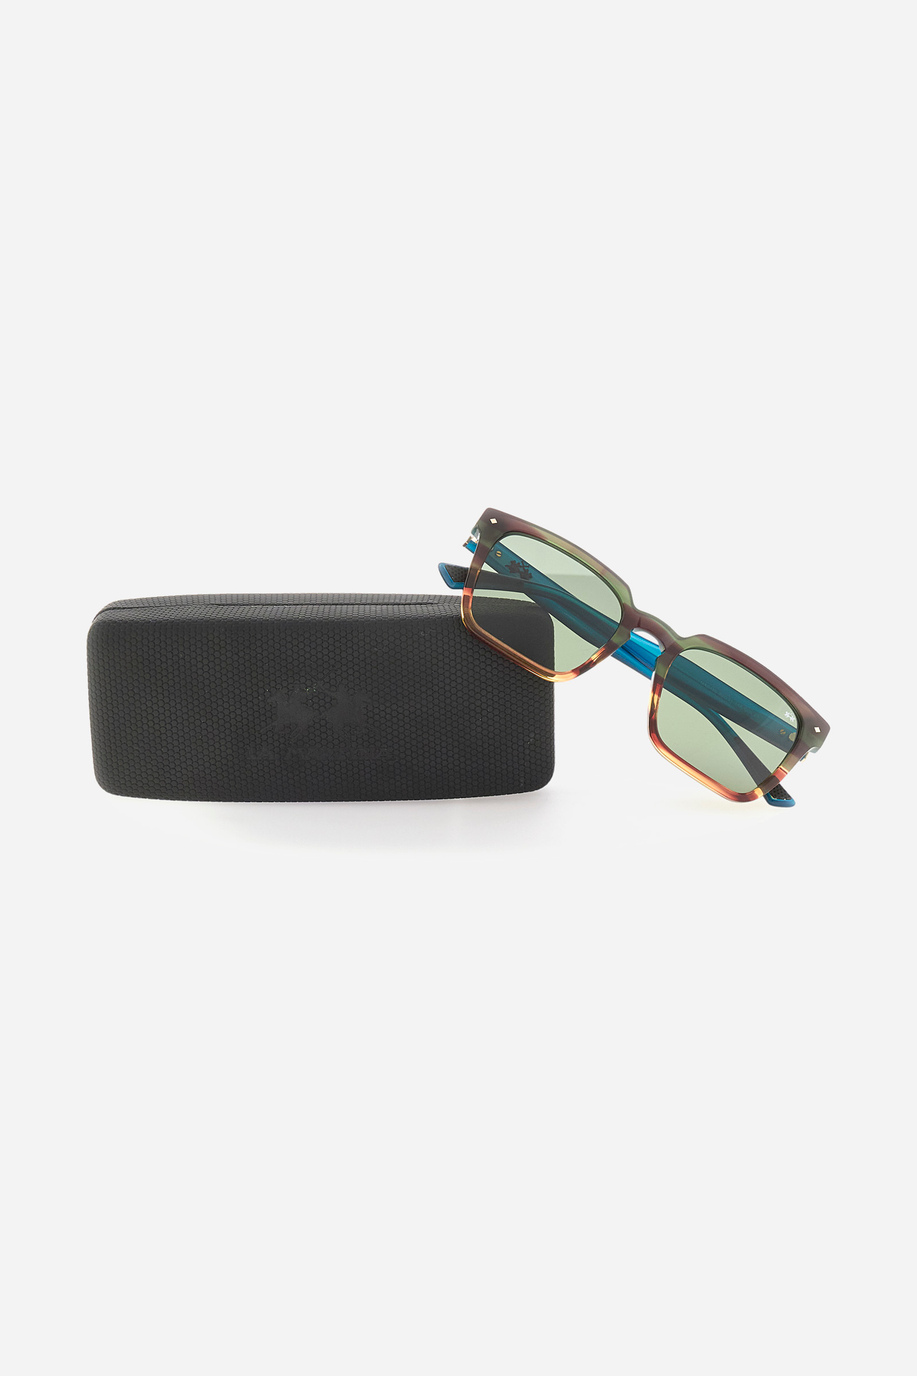 Men’s square sunglasses model - Accessories | La Martina - Official Online Shop